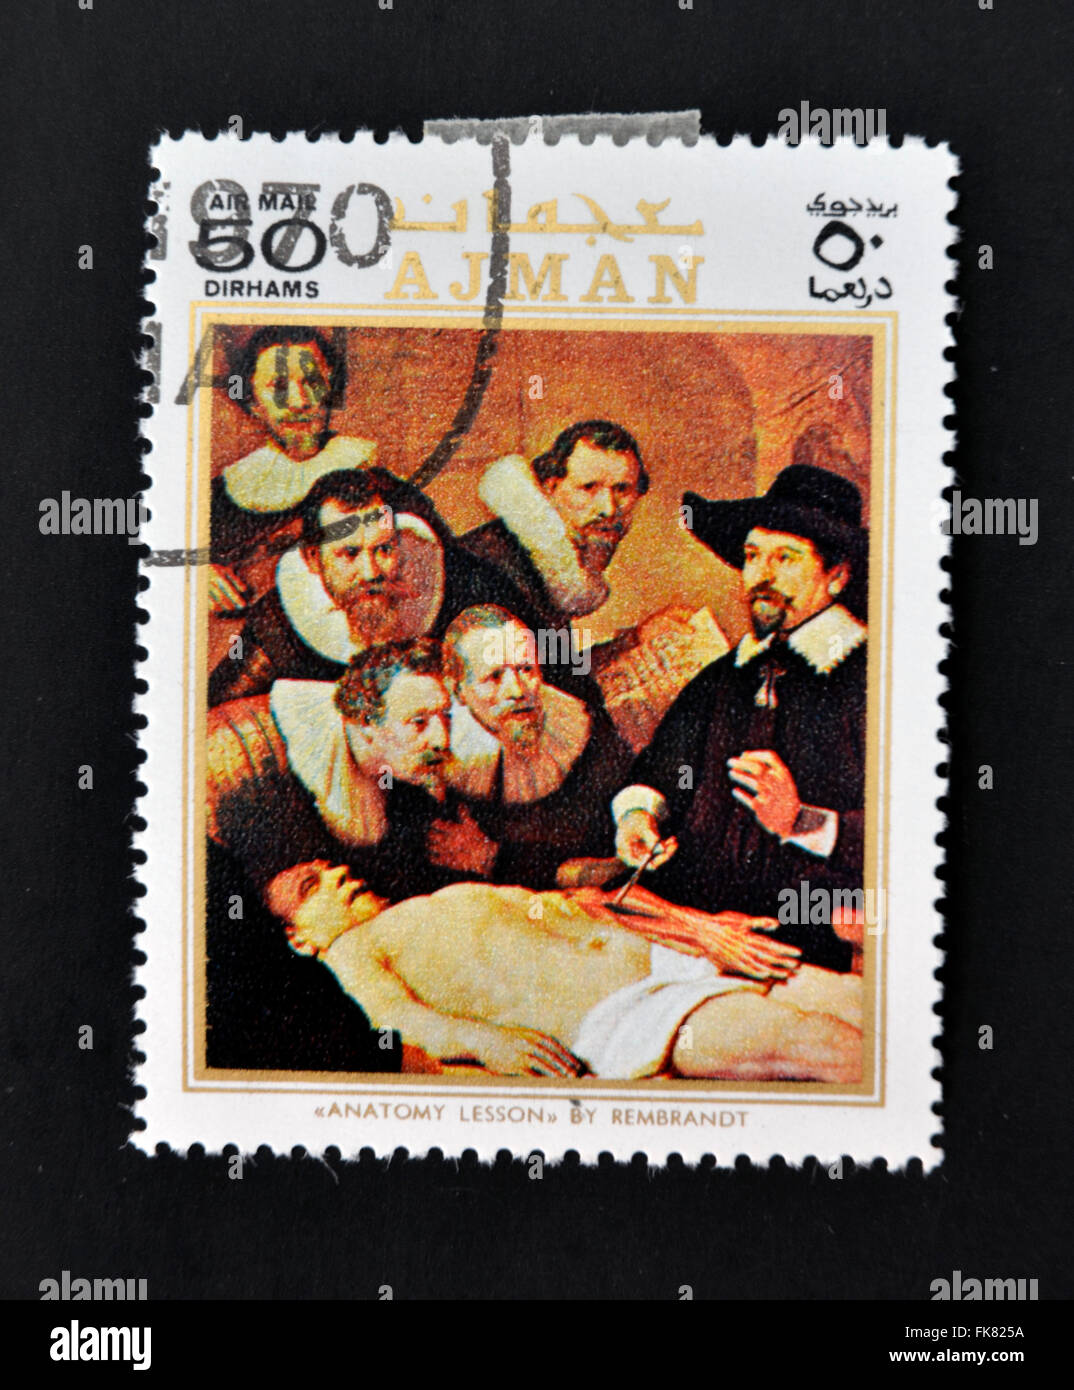 AJMAN - CIRCA 1970: A stamp printed in Ajman shows Anatomy lesson by Rembrandt, circa 1970 Stock Photo